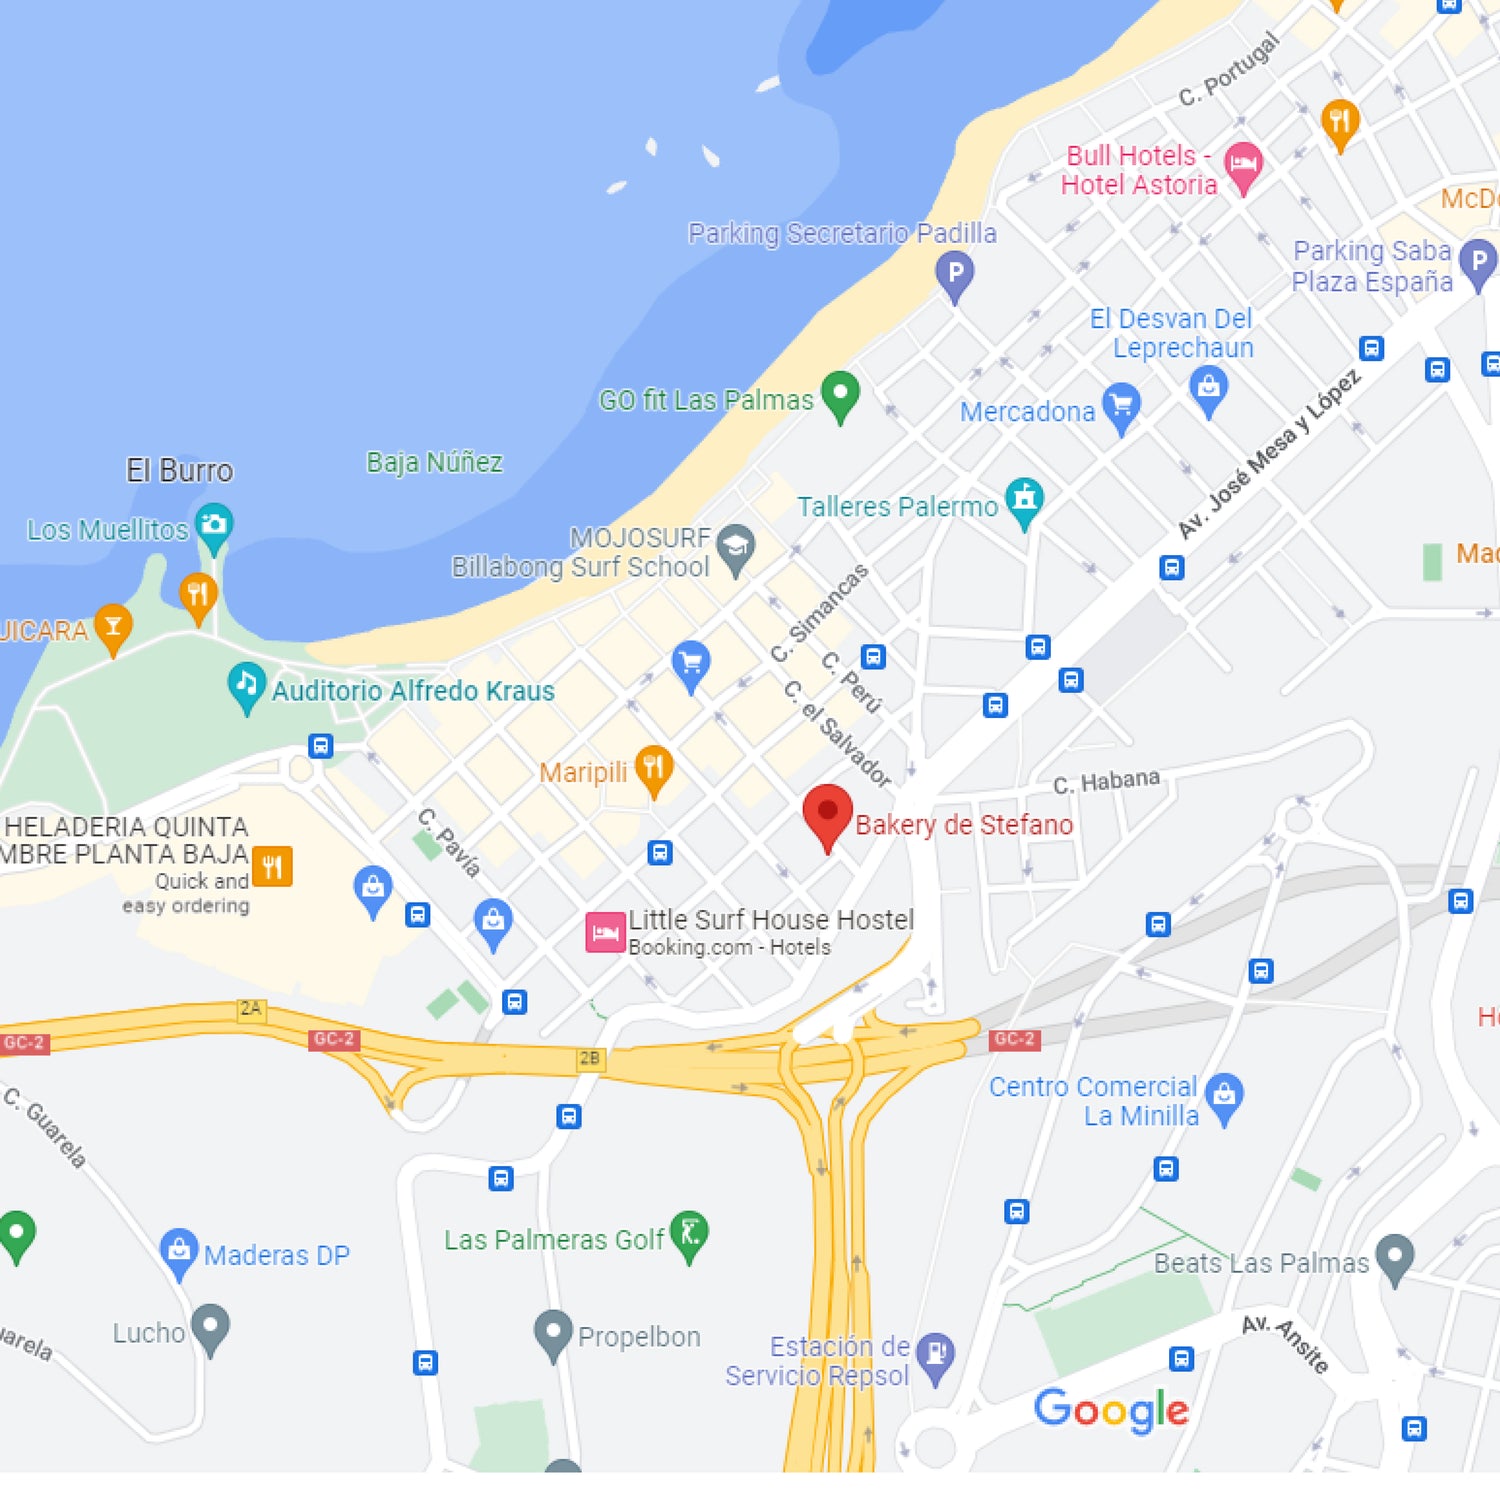 bakery de stefano location google maps